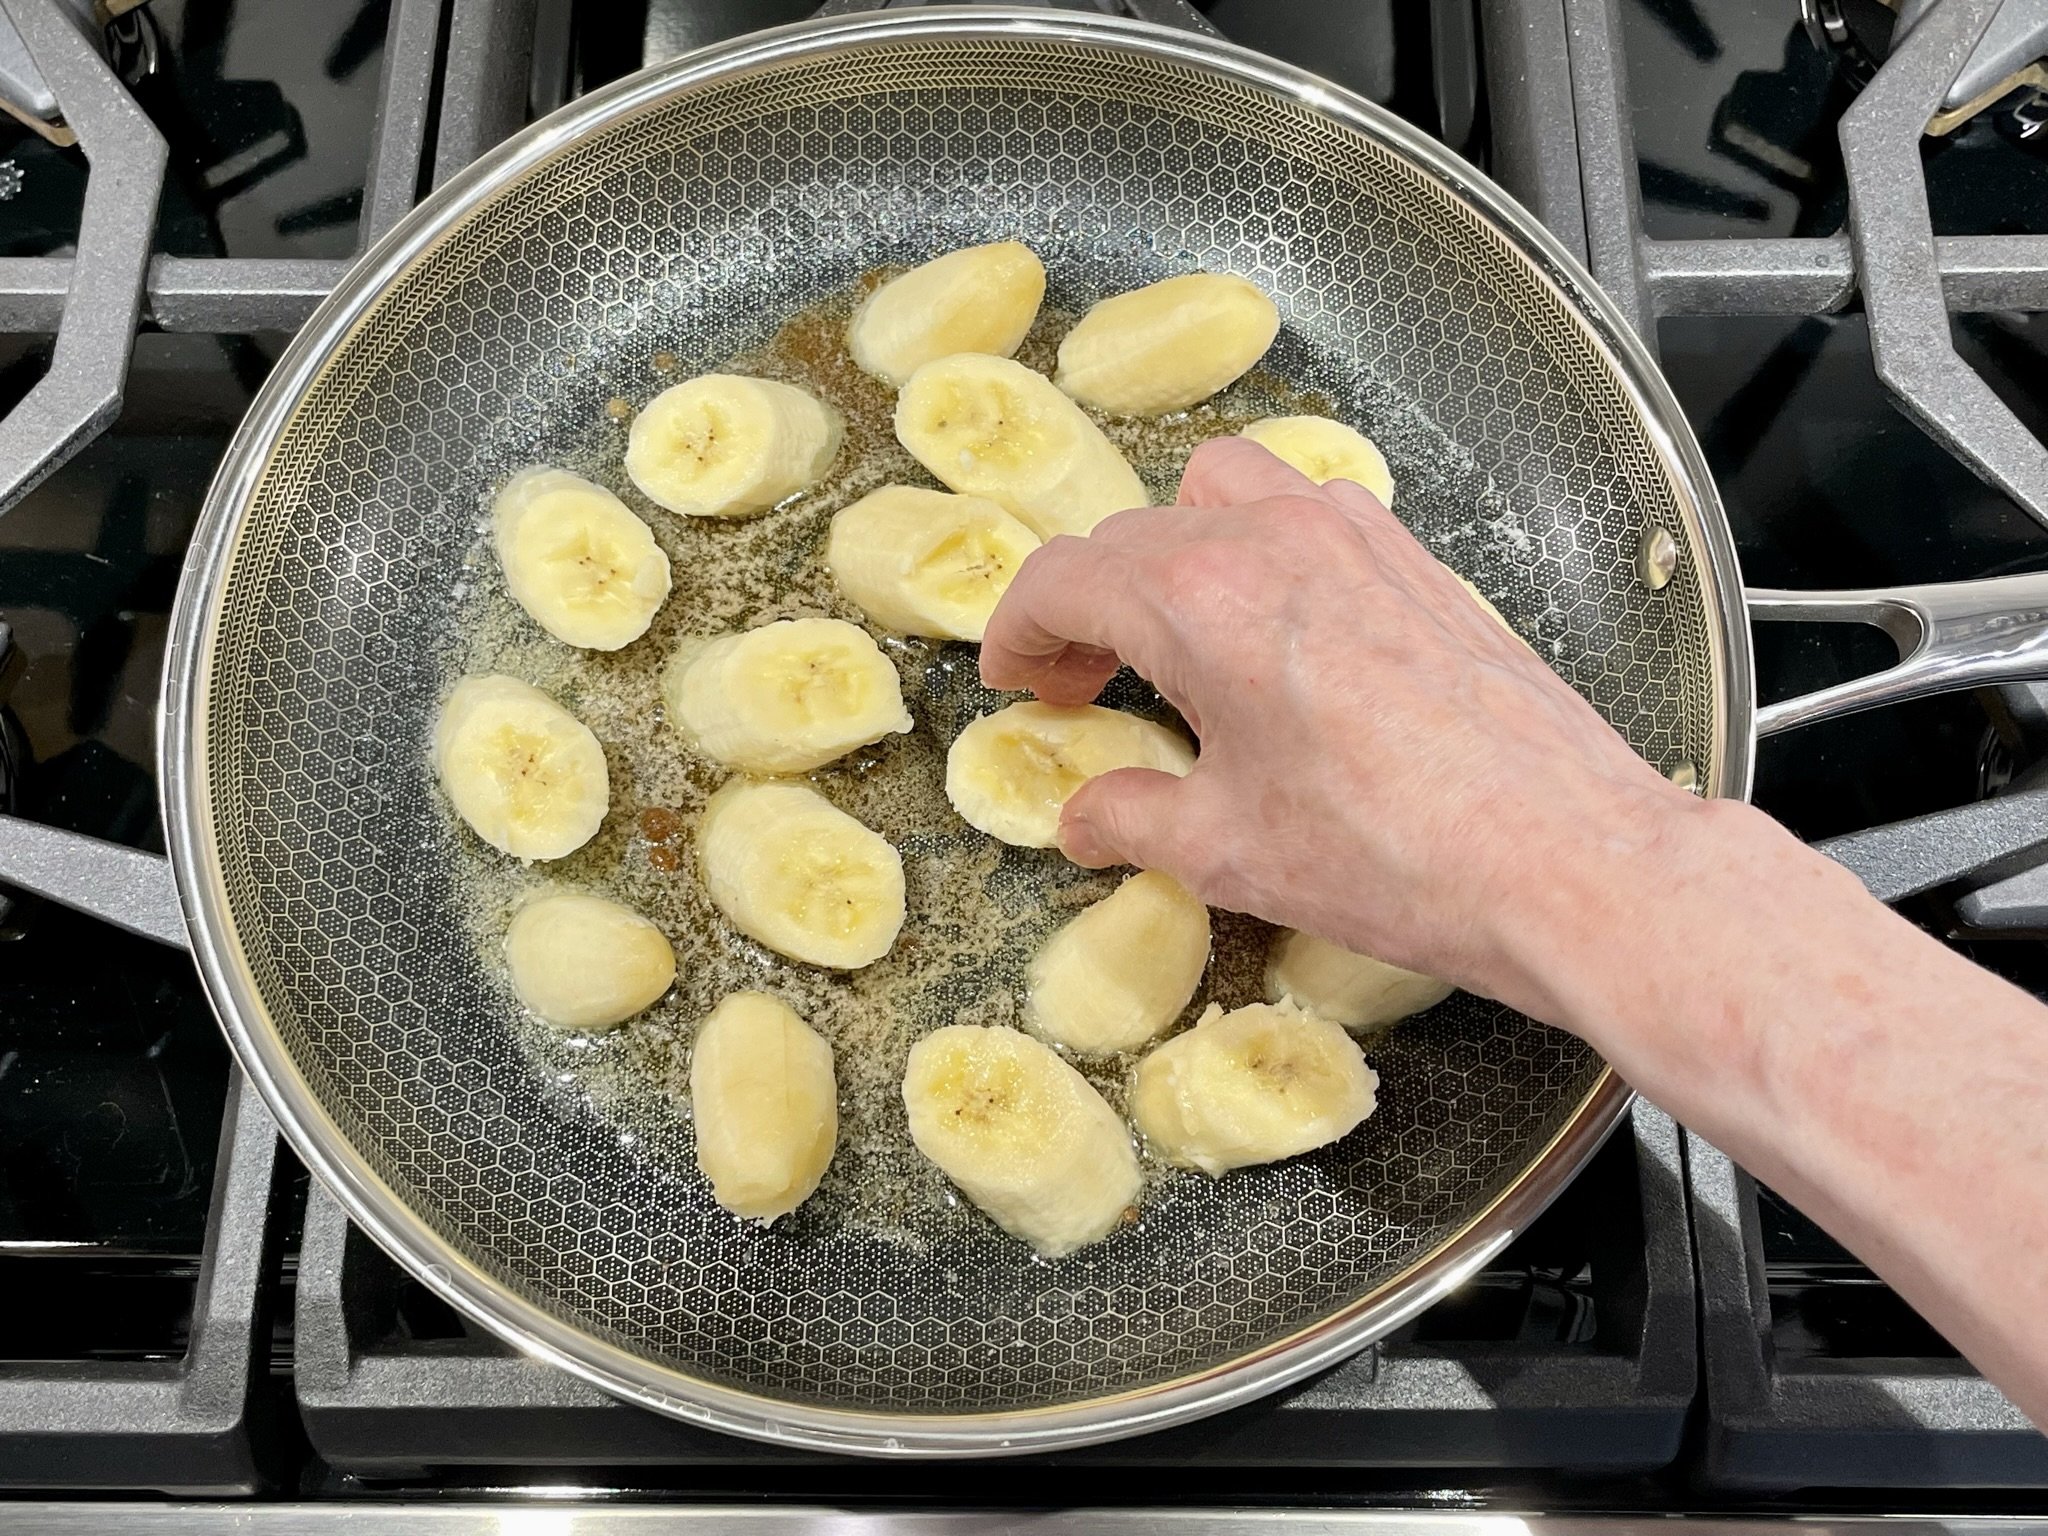 Add sliced bananas.